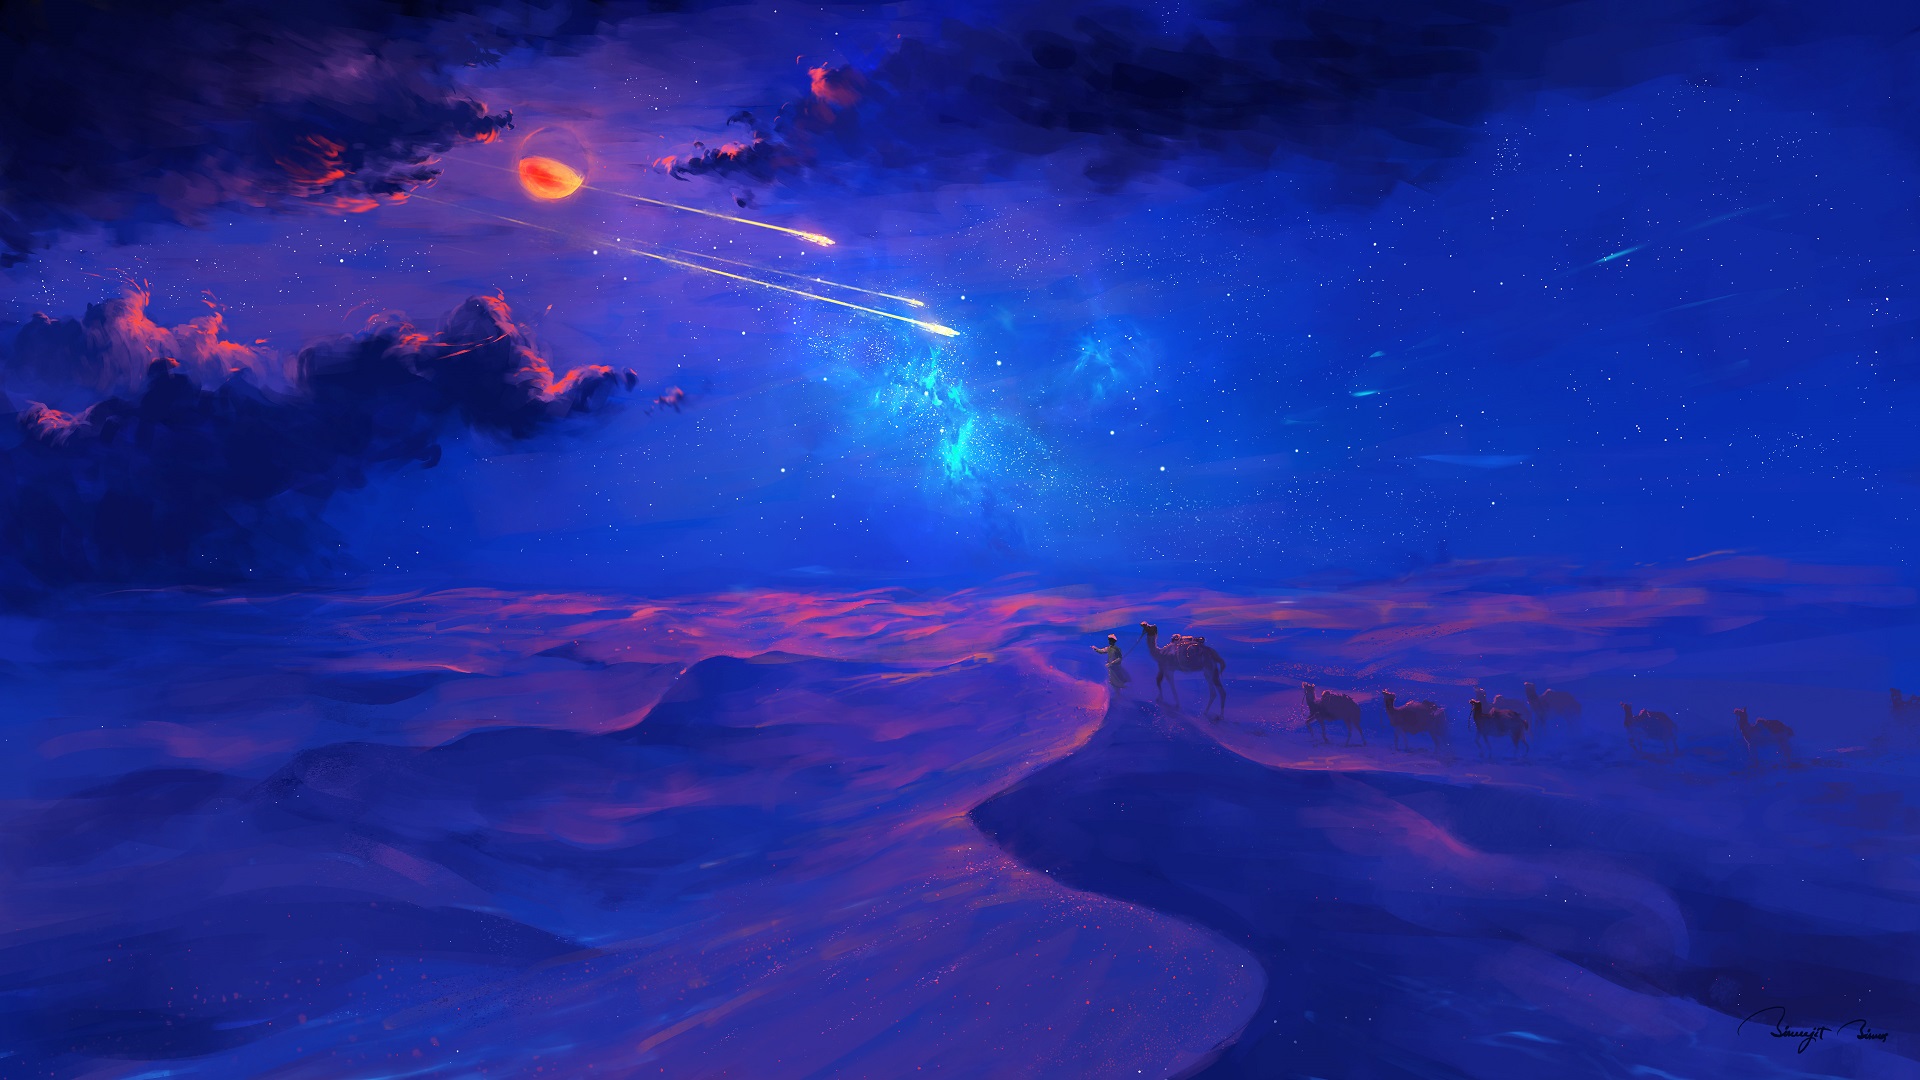 BisBiswas Digital Art Fantasy Art Camels Desert Stars Clouds Shooting Stars Moon Lunar Eclipses 1920x1080